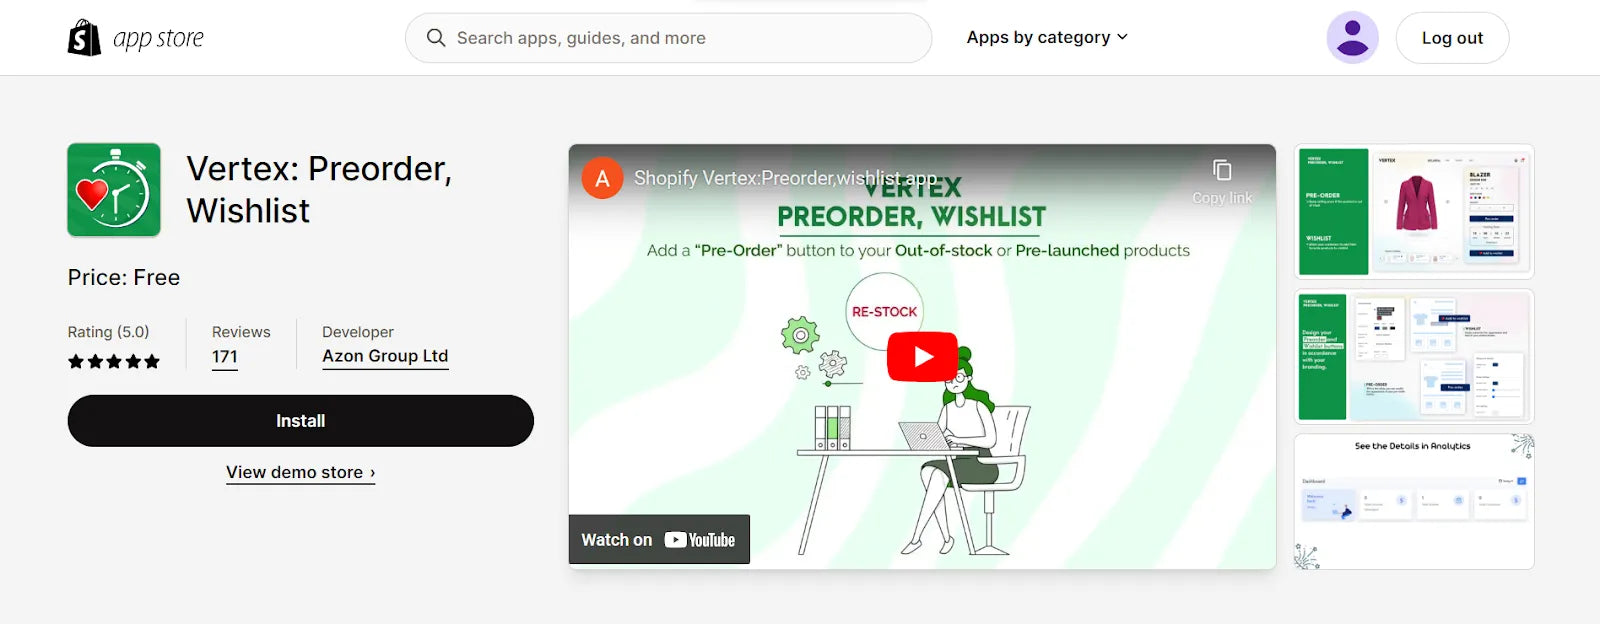 Shopify pre-order app - Vertex: Preorder, Wishlist